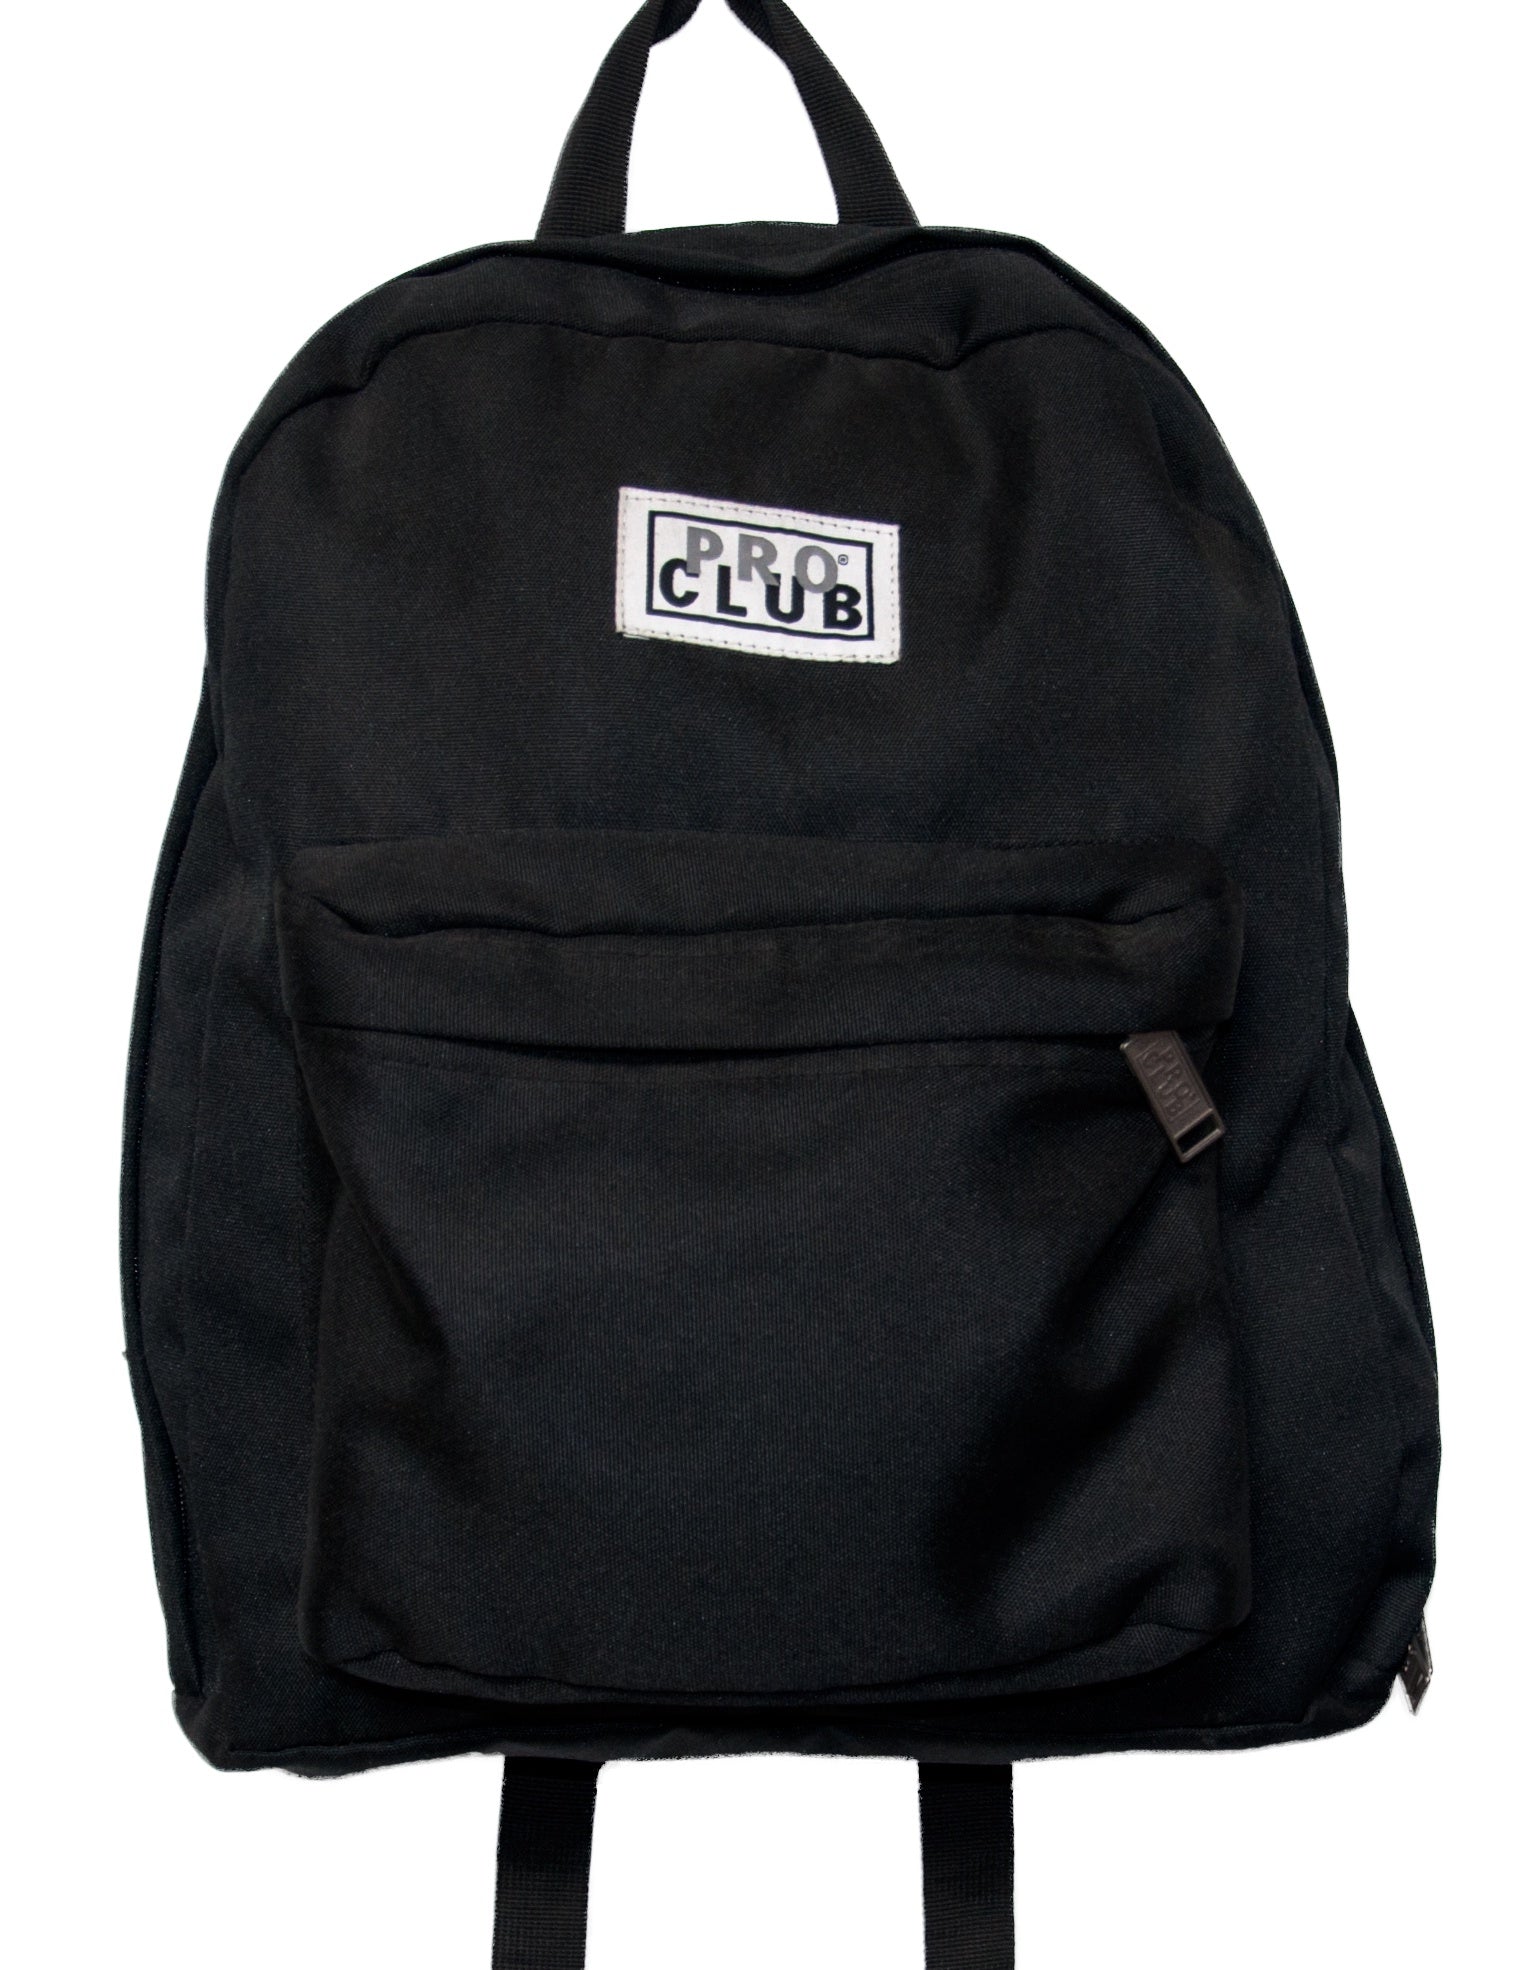 Pro Club Backpack - Black